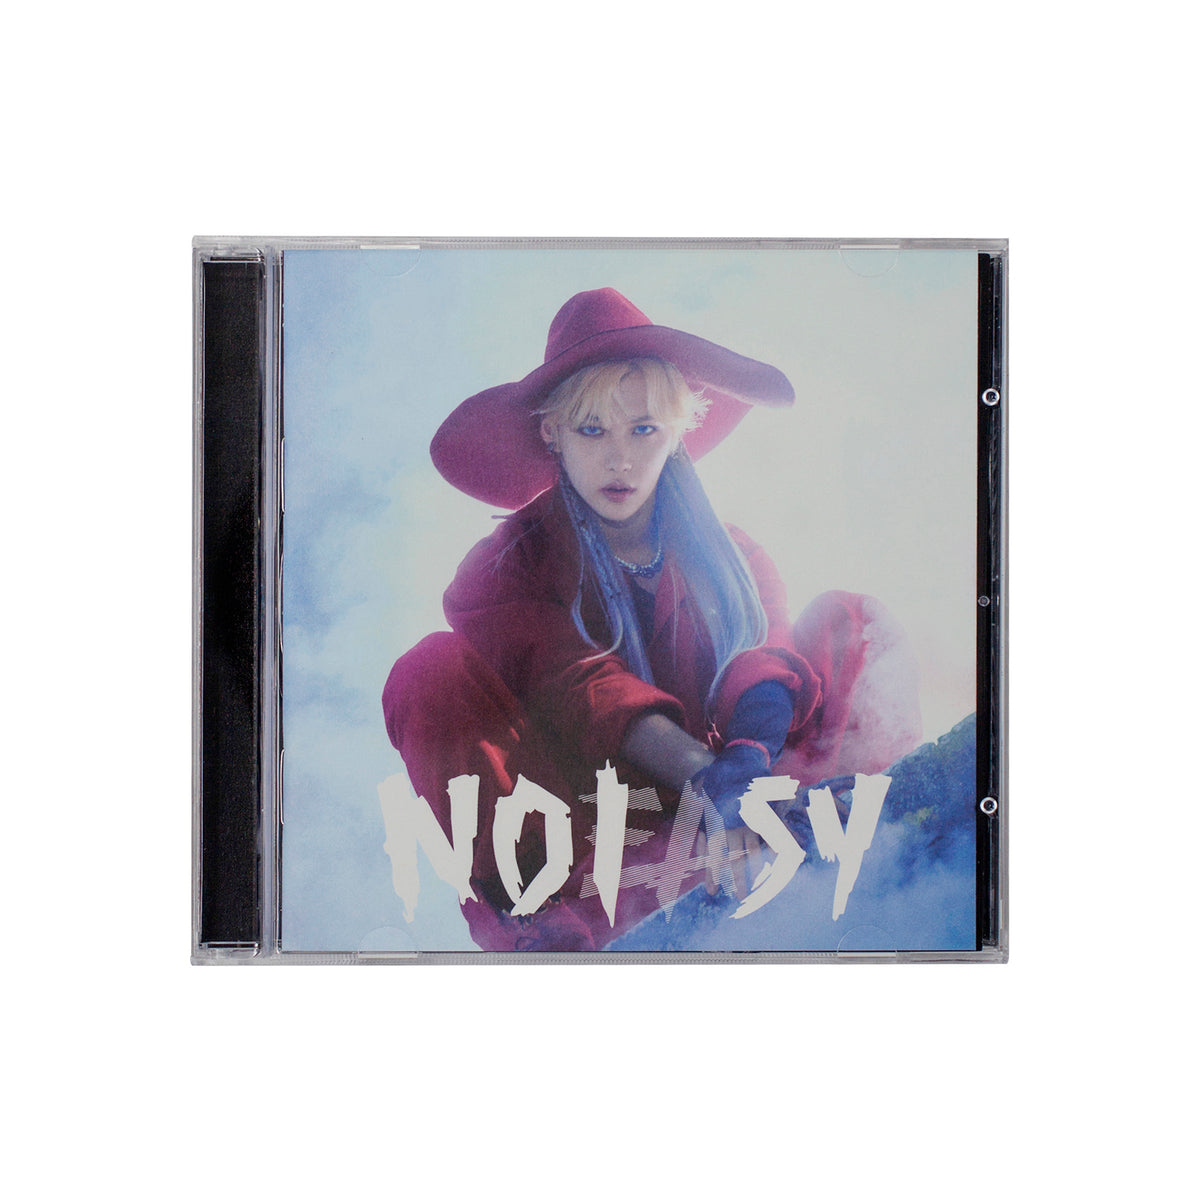 Stray Kids NOEASY 2nd Album Jewel Case Ver - Felix Ver Main Product Image